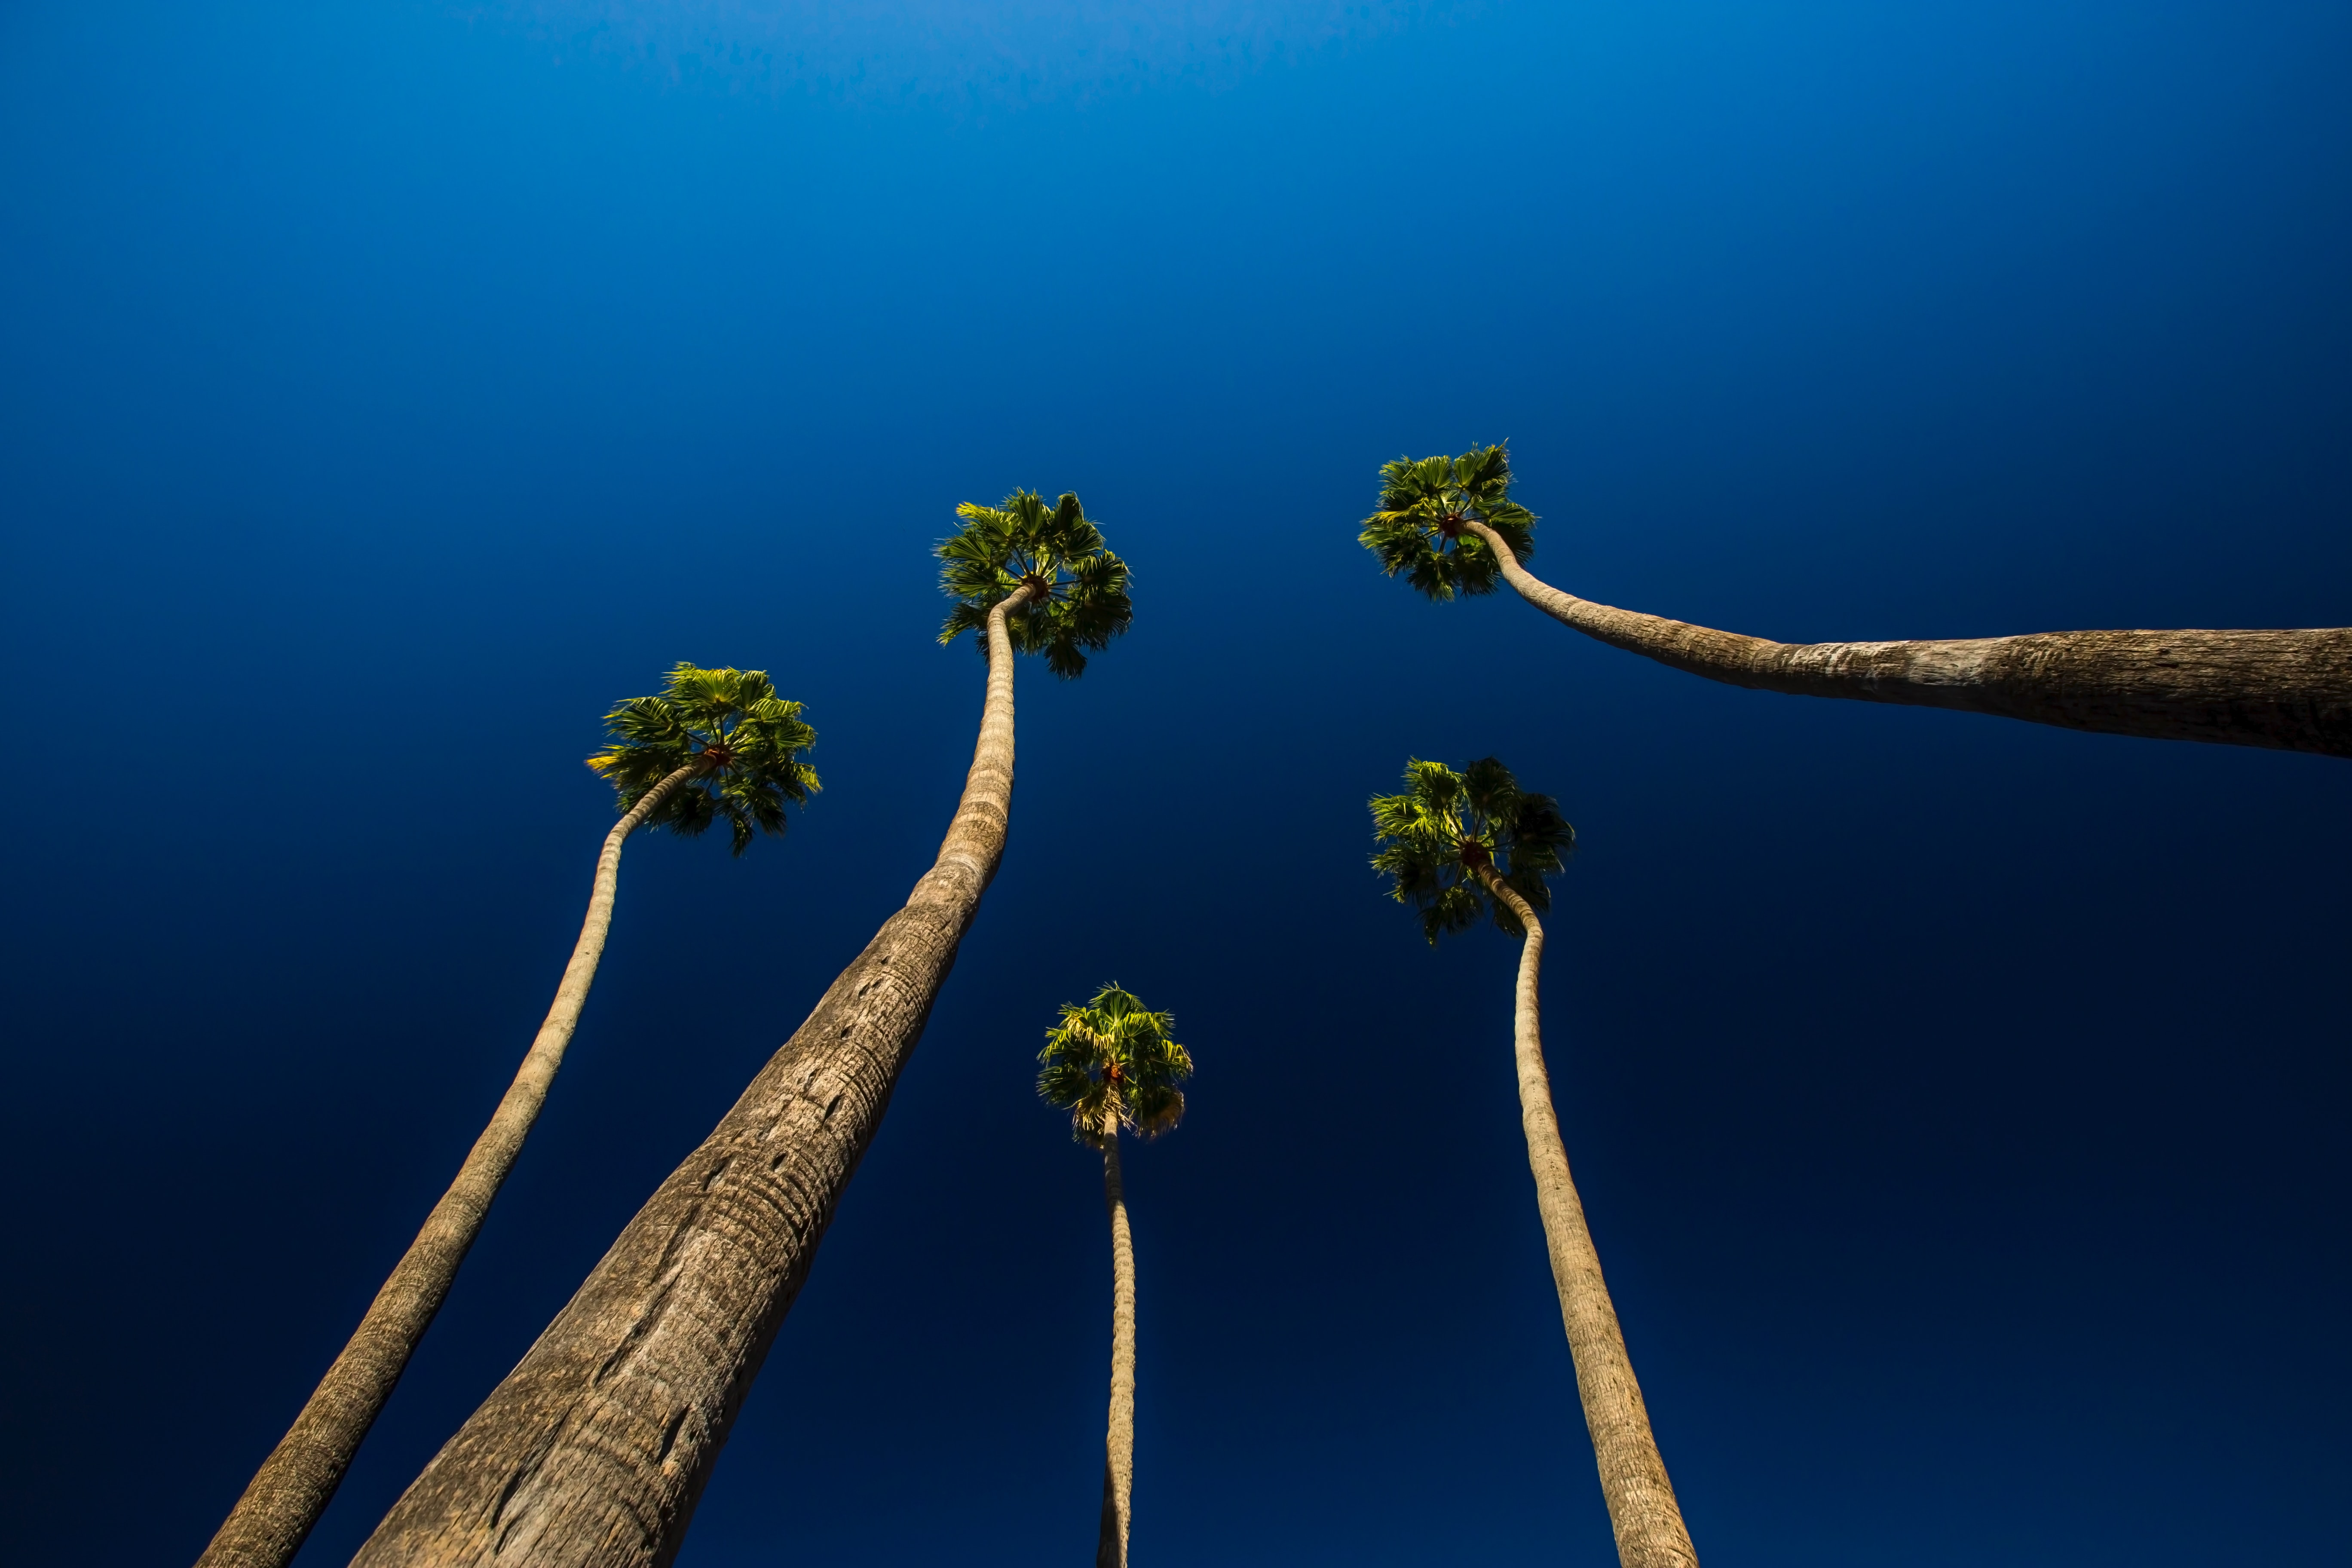 5 palm trees with a blue sky.